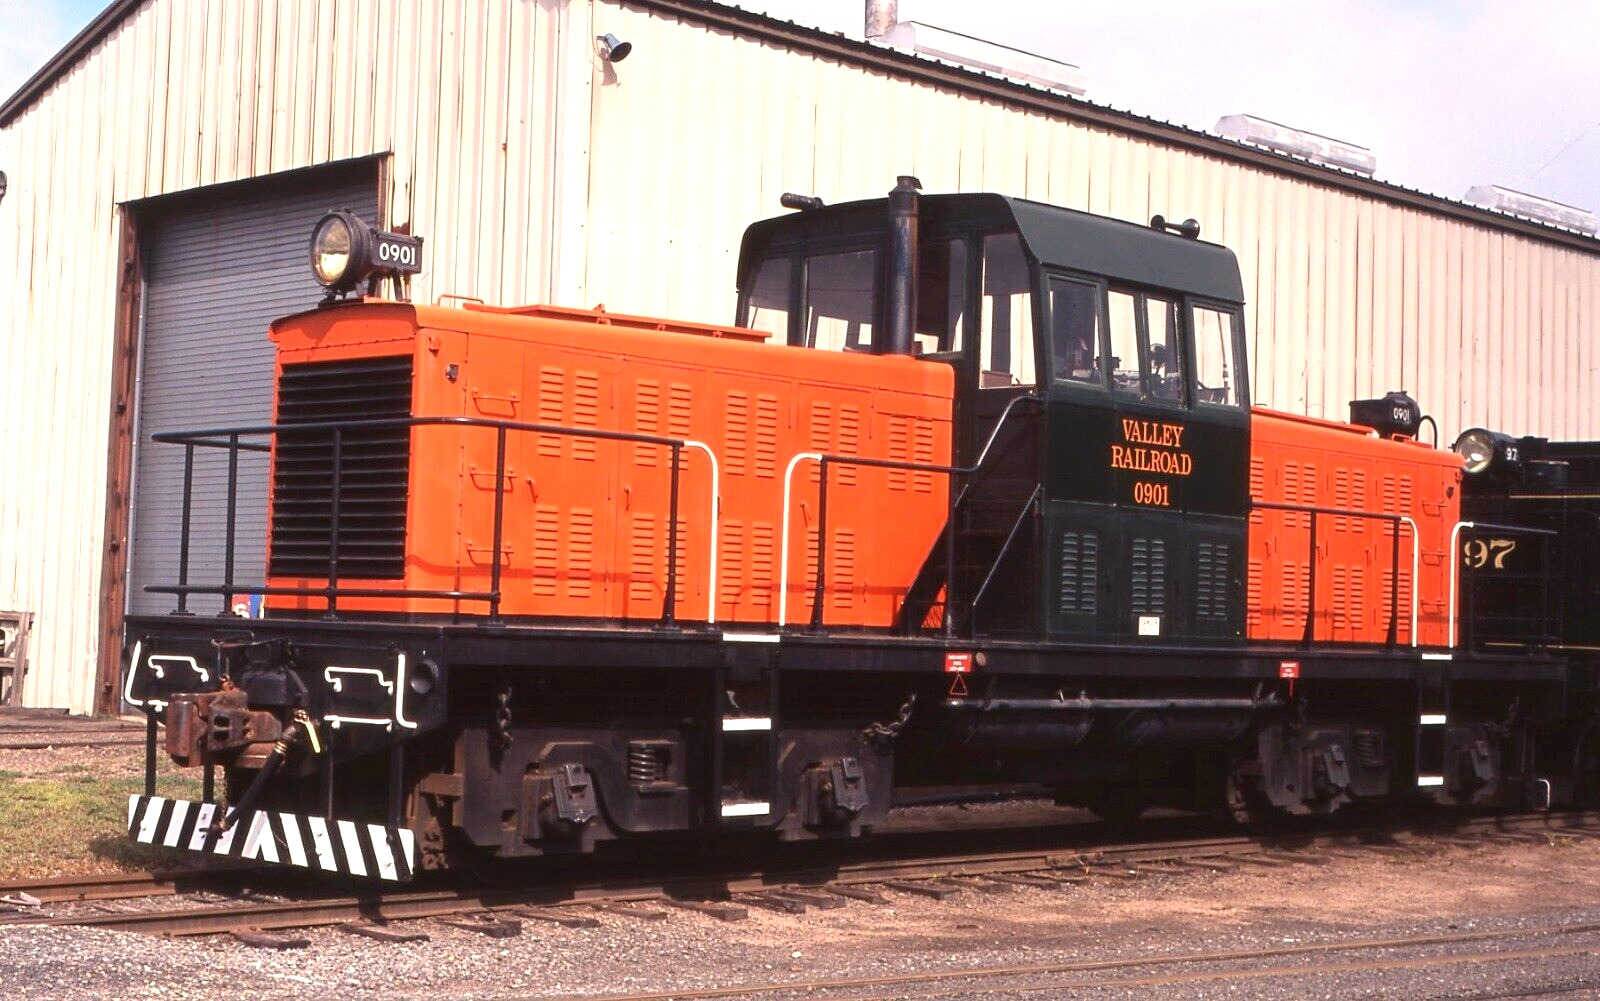 Original Slide: Valley Railroad GE 80 TON 0901